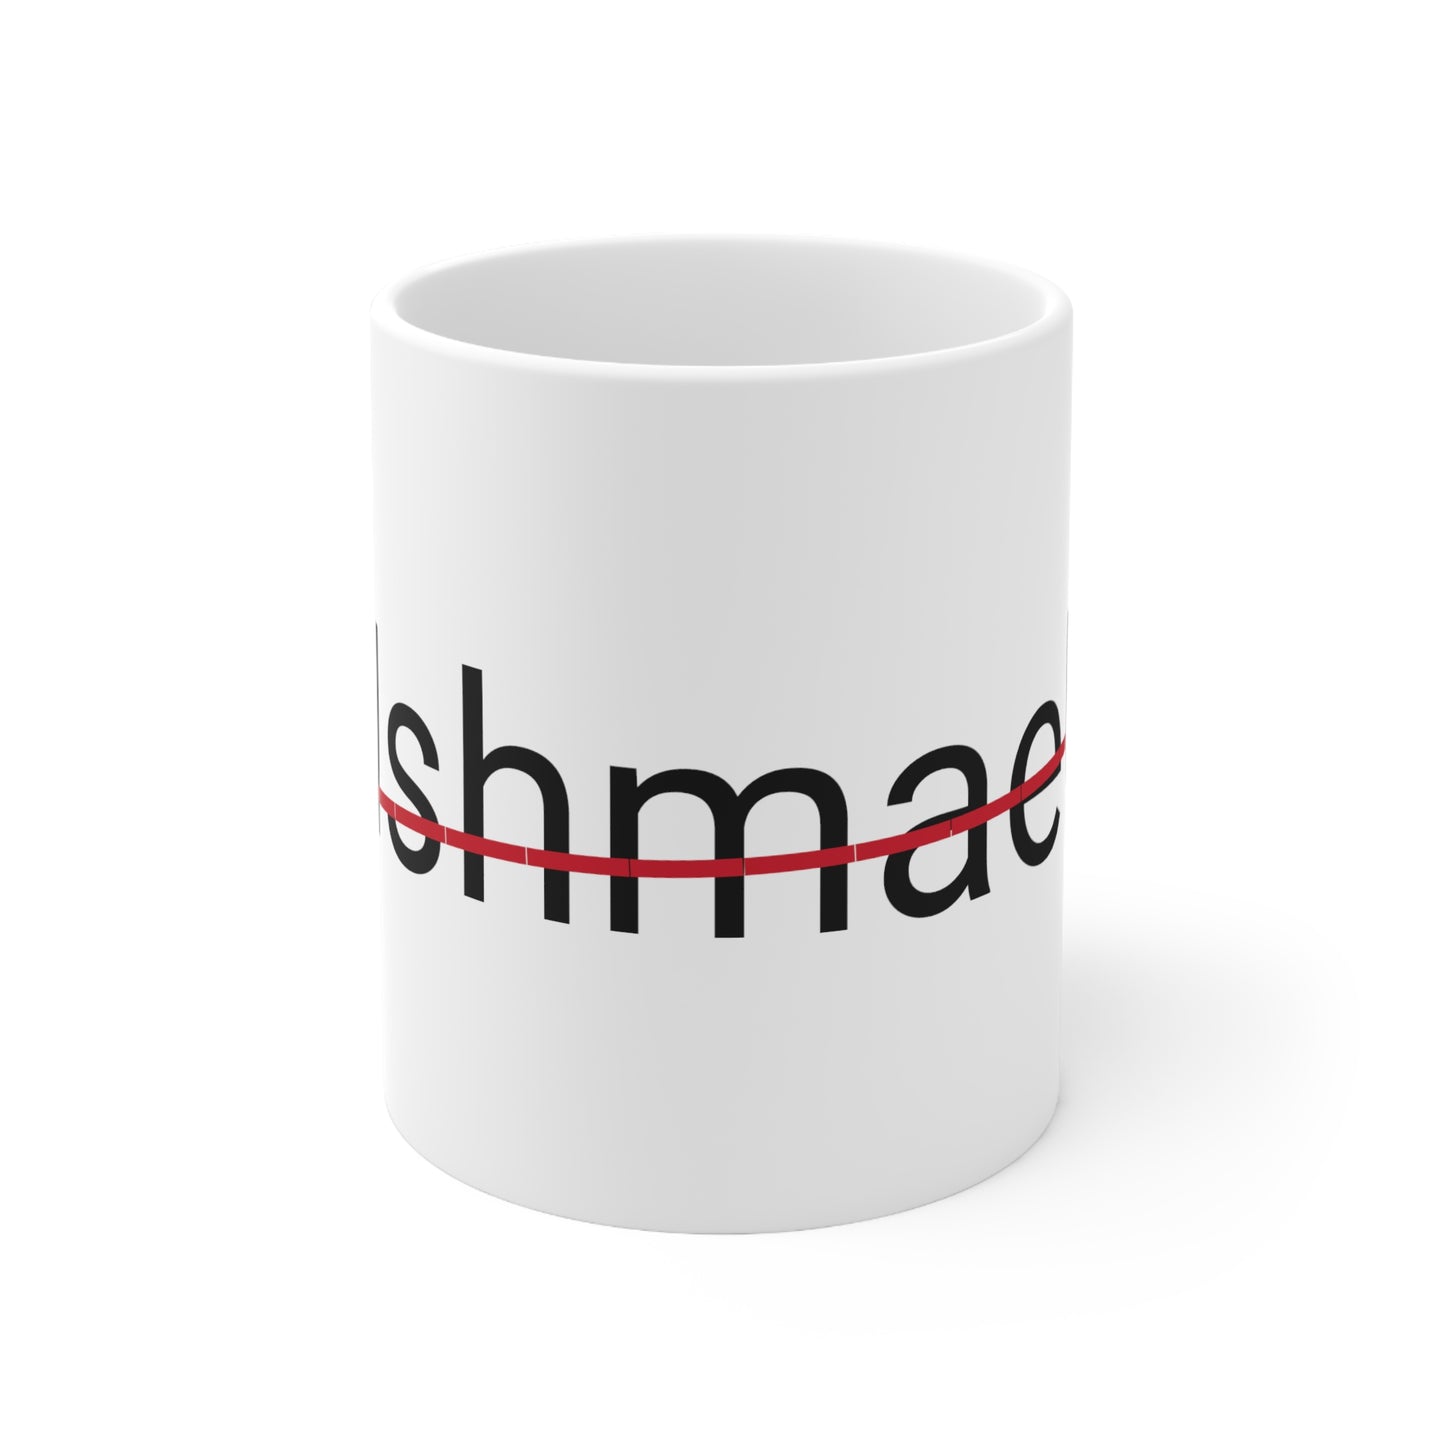 ishmael is not my name Ceramic Mug 11oz